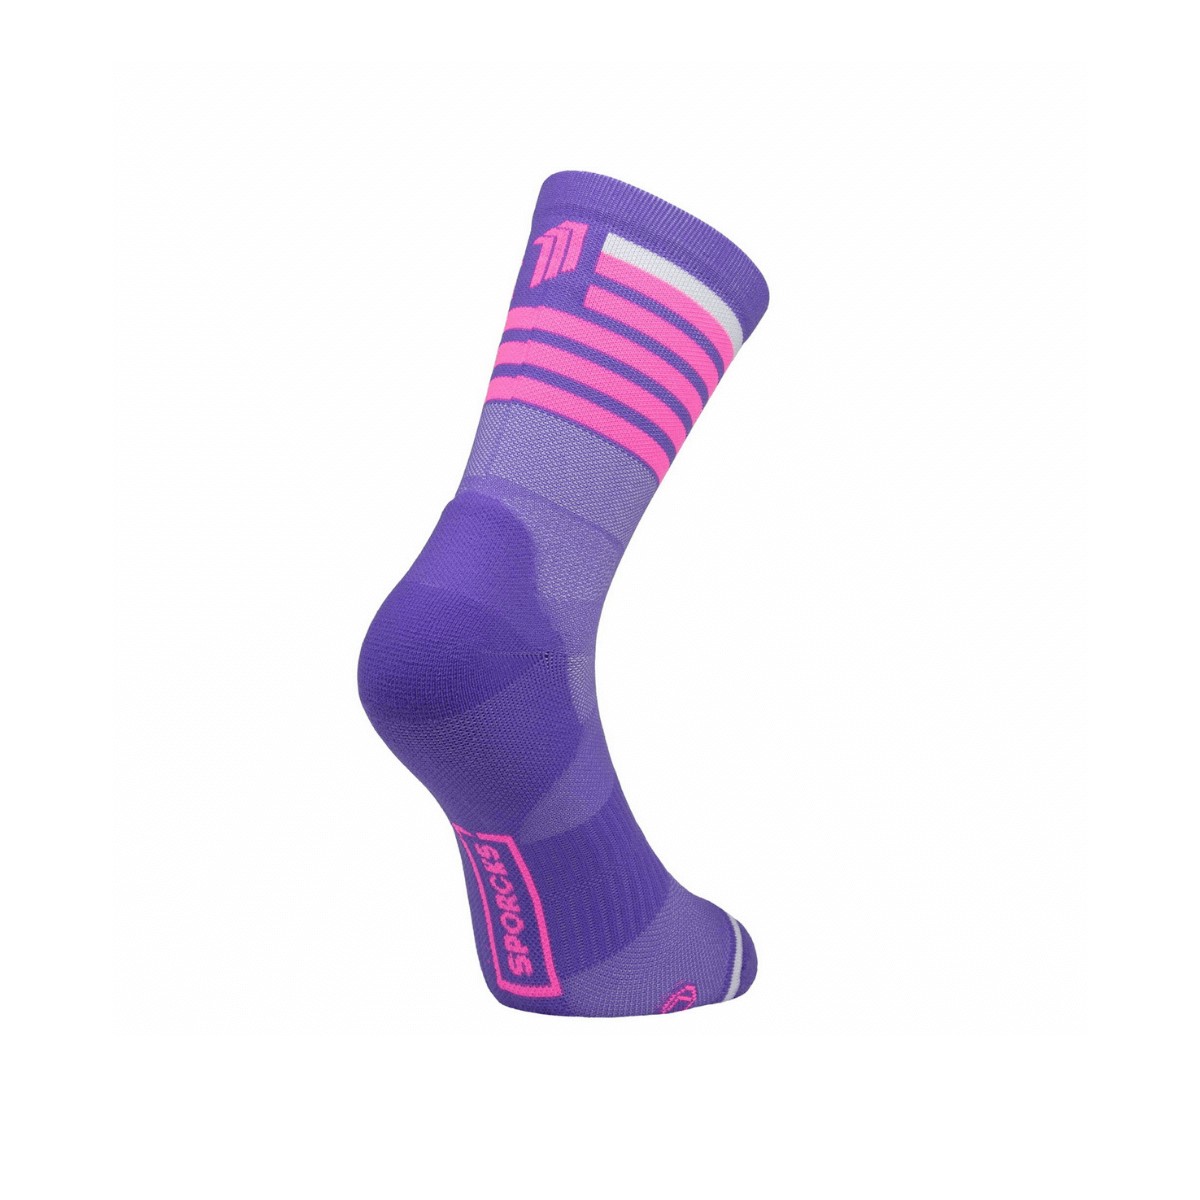 Sporcks Red Air Violet Socks, Size XS.